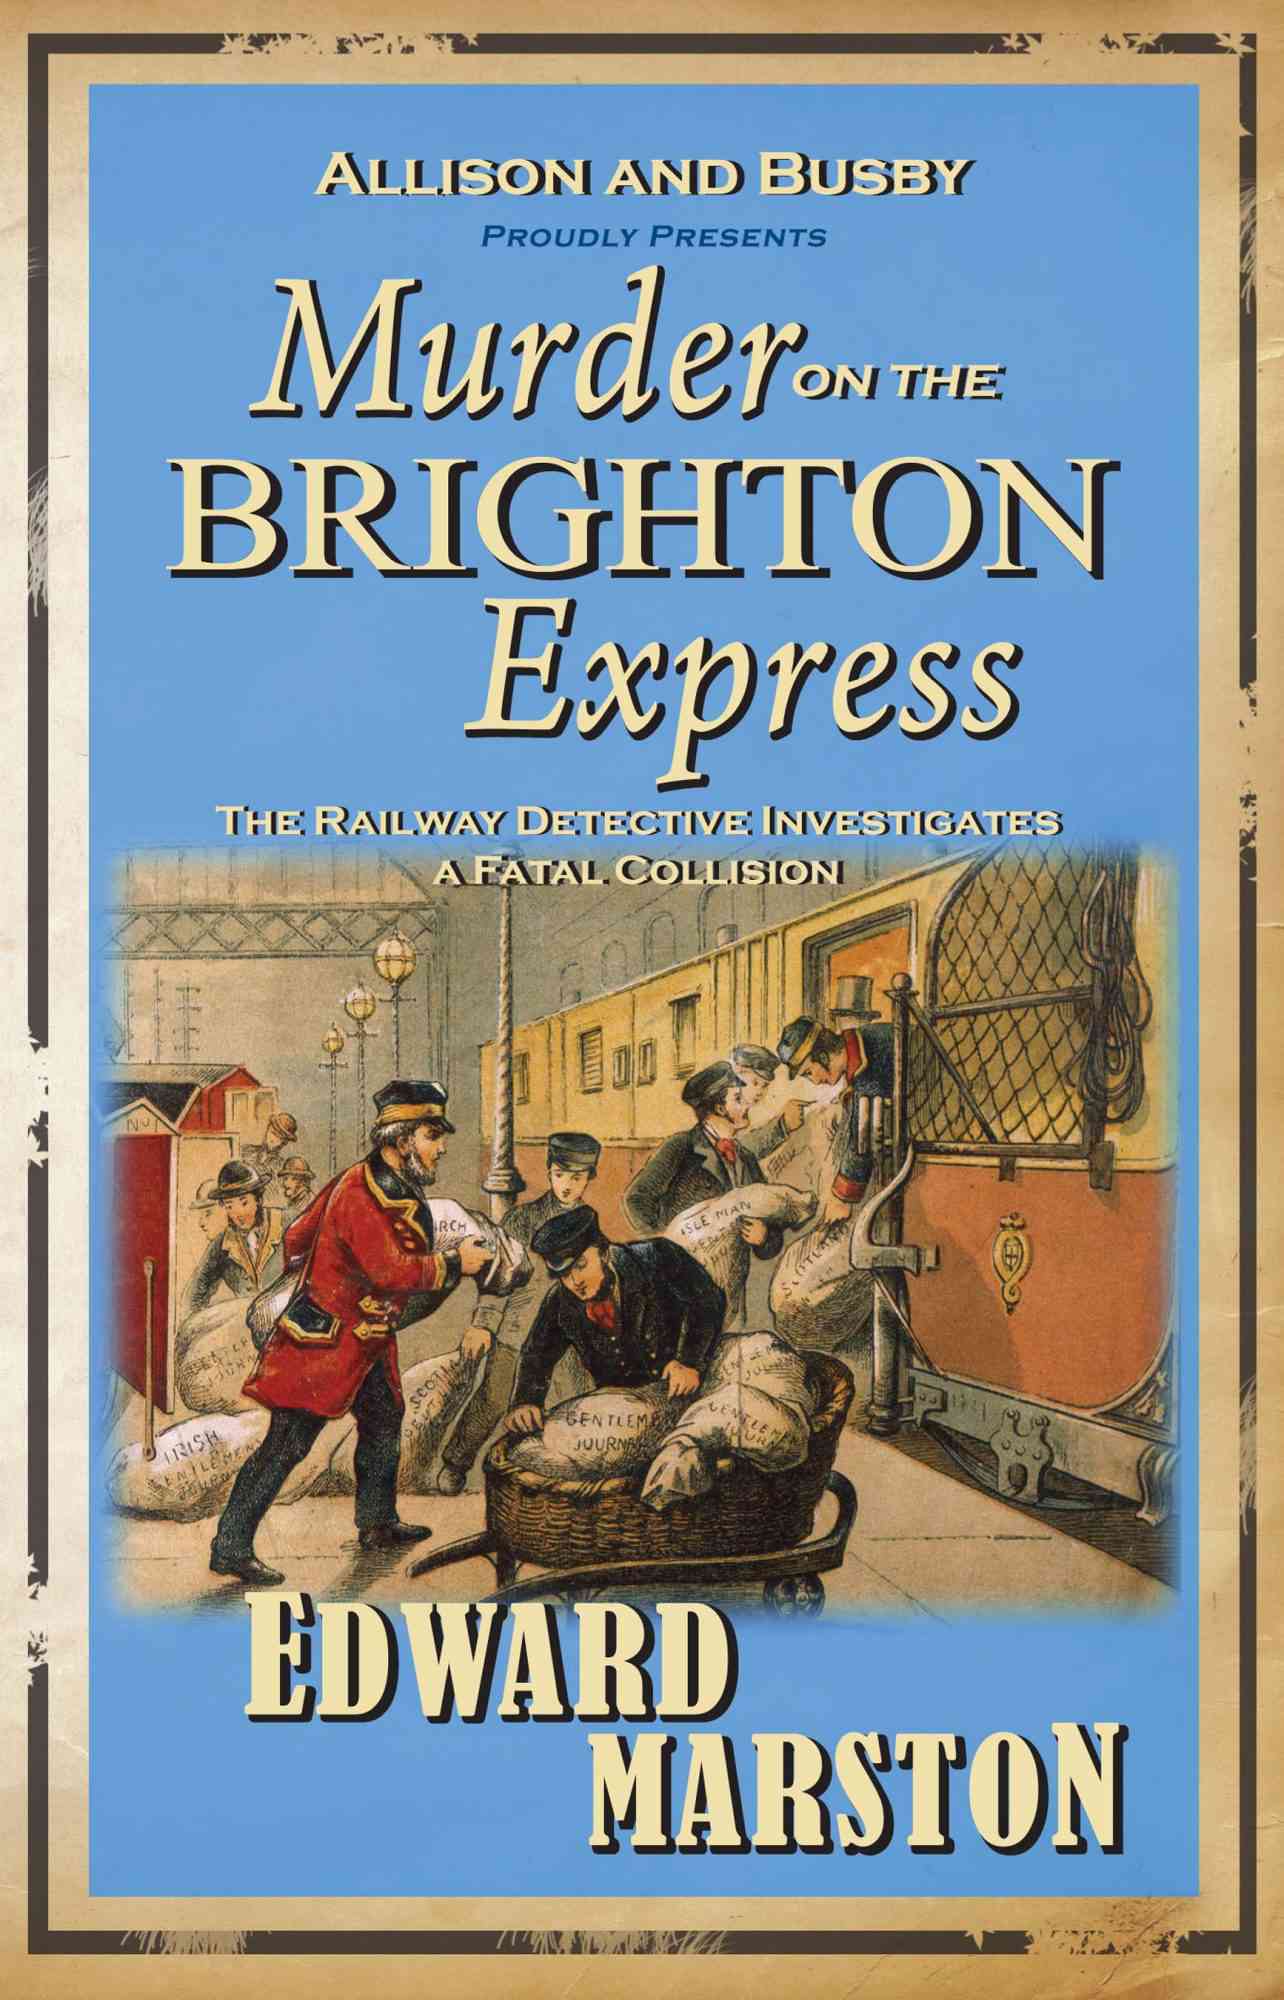 Murder on the Brighton Express by Edward Marston (2008)